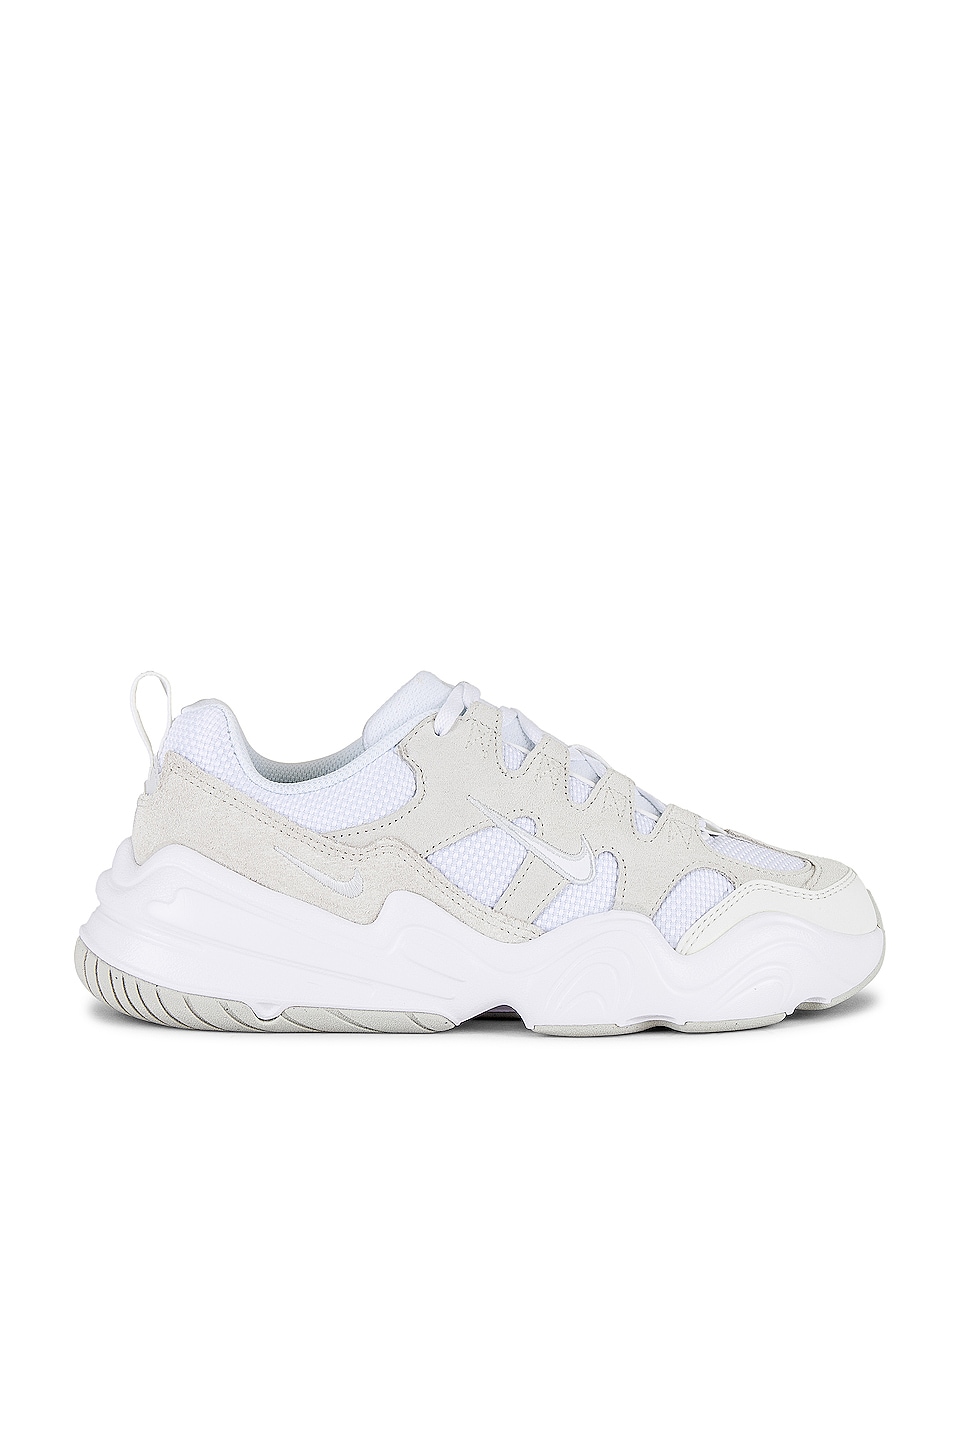 Nike Tech Hera Sneaker in White, Summit White, & Photon Dust | REVOLVE